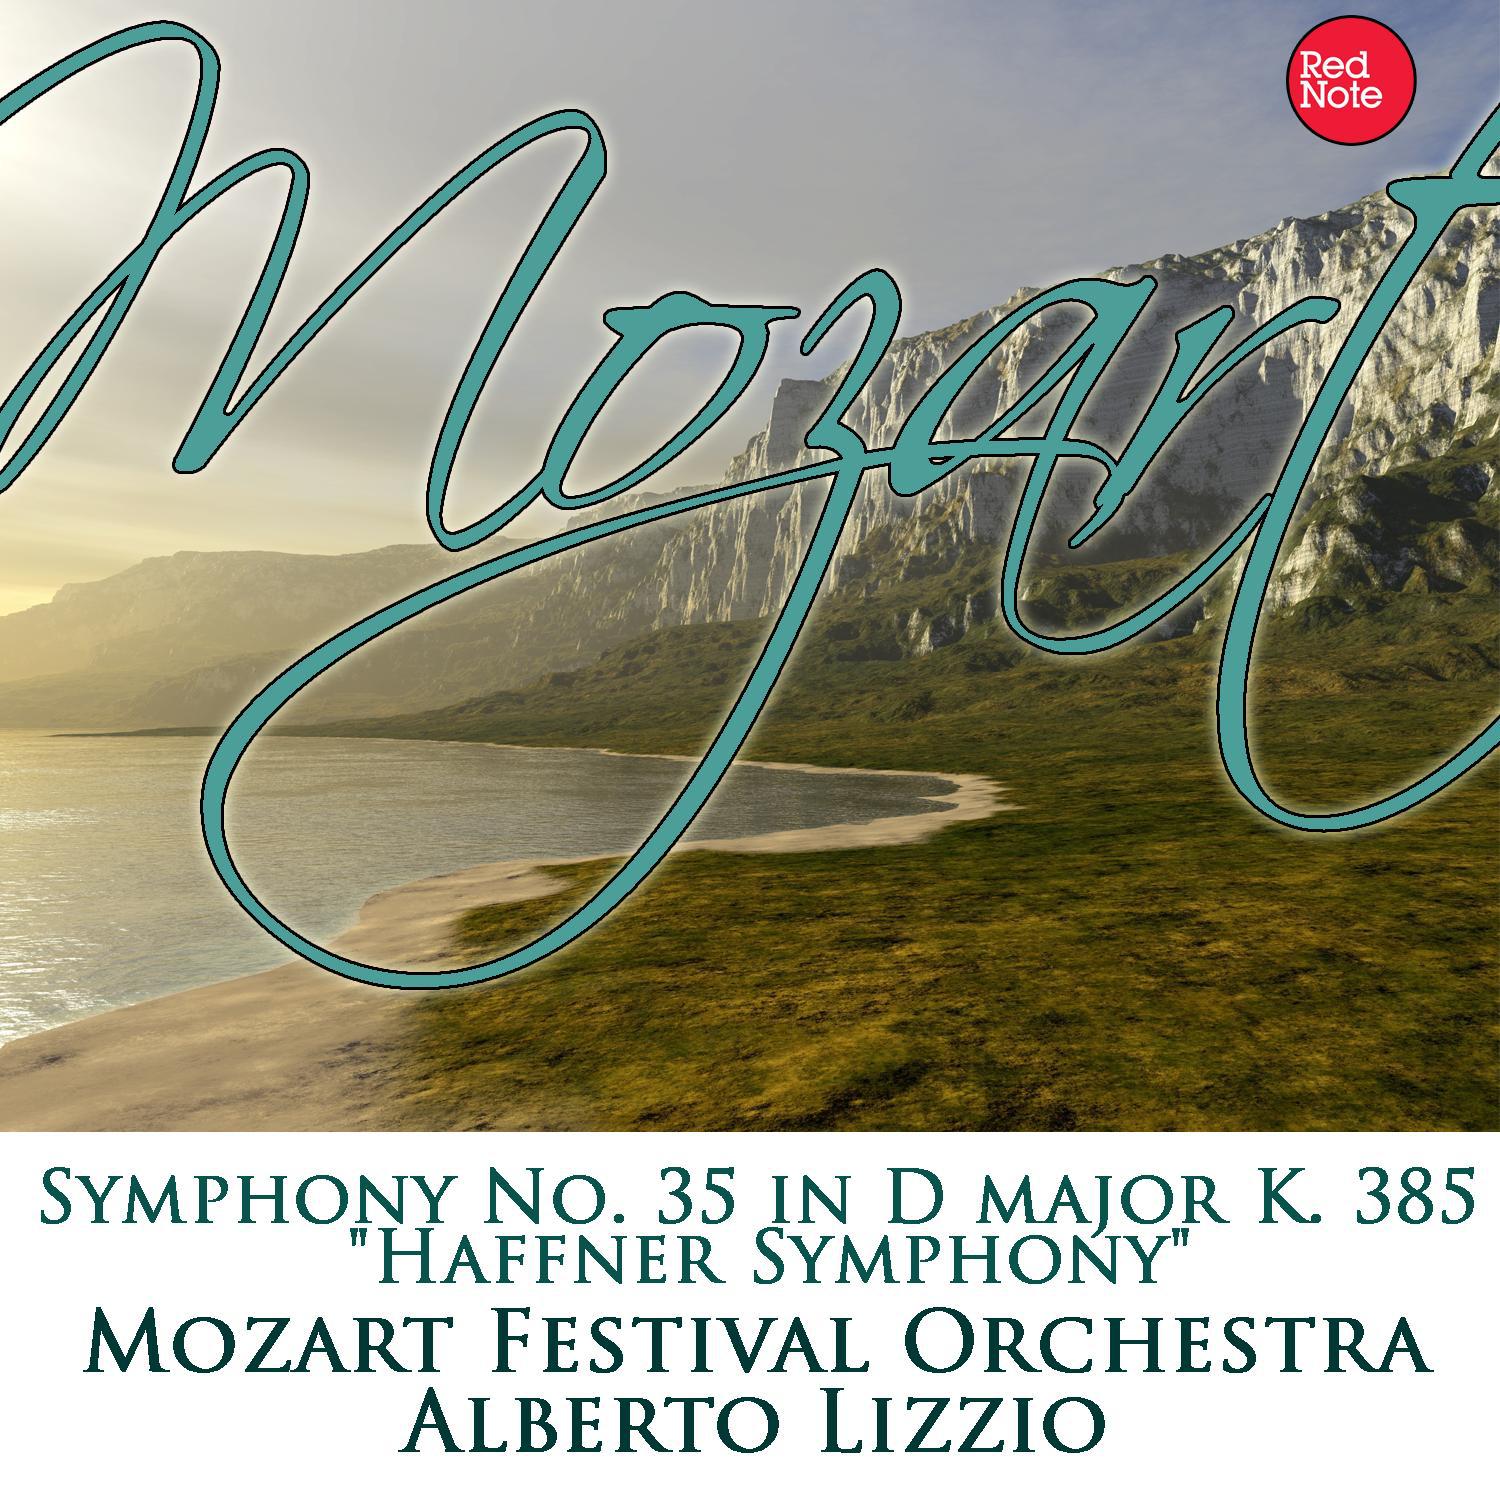 Mozart: Symphony No. 35 in D major K. 385 "Haffner Symphony"